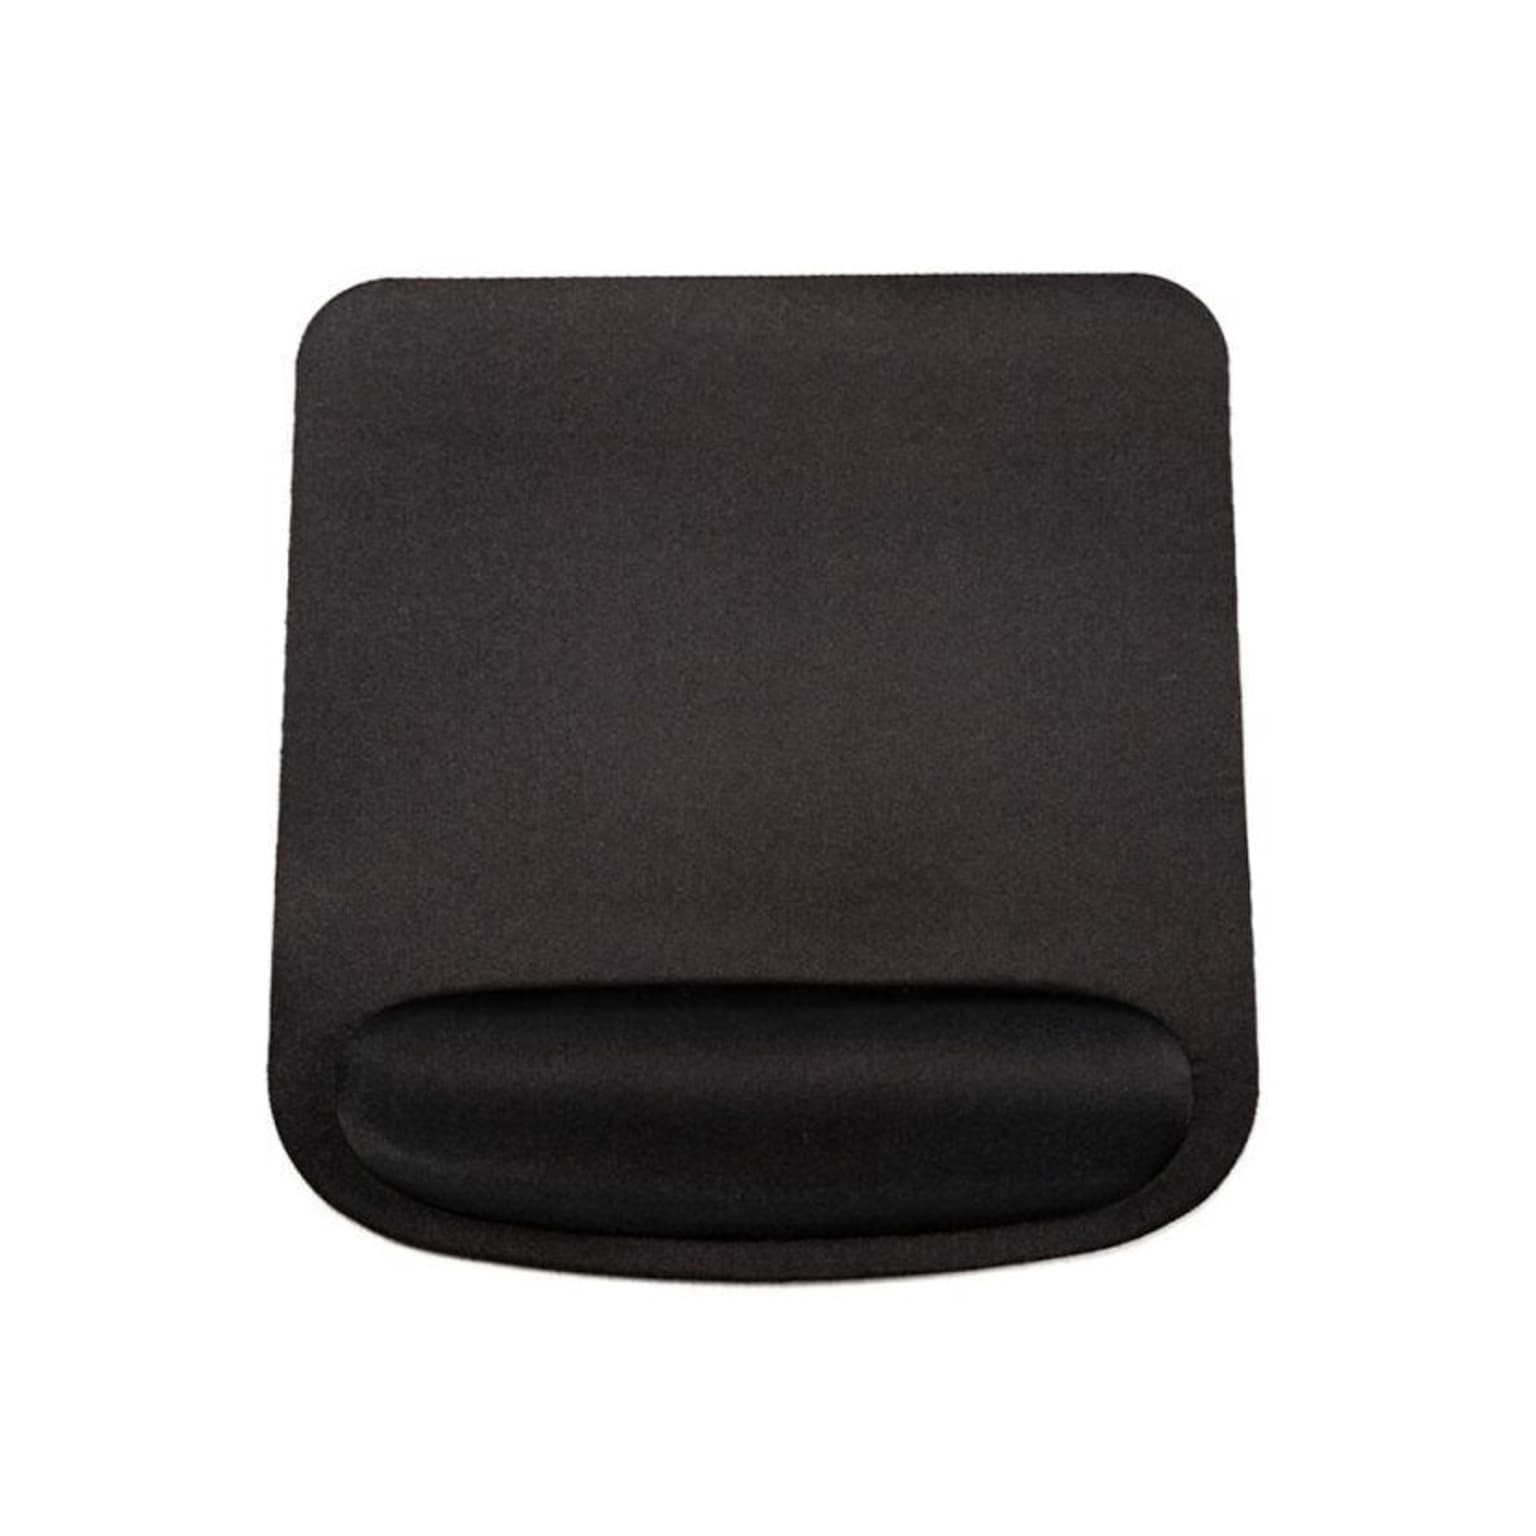 OTM Essentials Foam Non-Skid Mouse Pad With Wrist Rest, Black (COB-A3CAA)